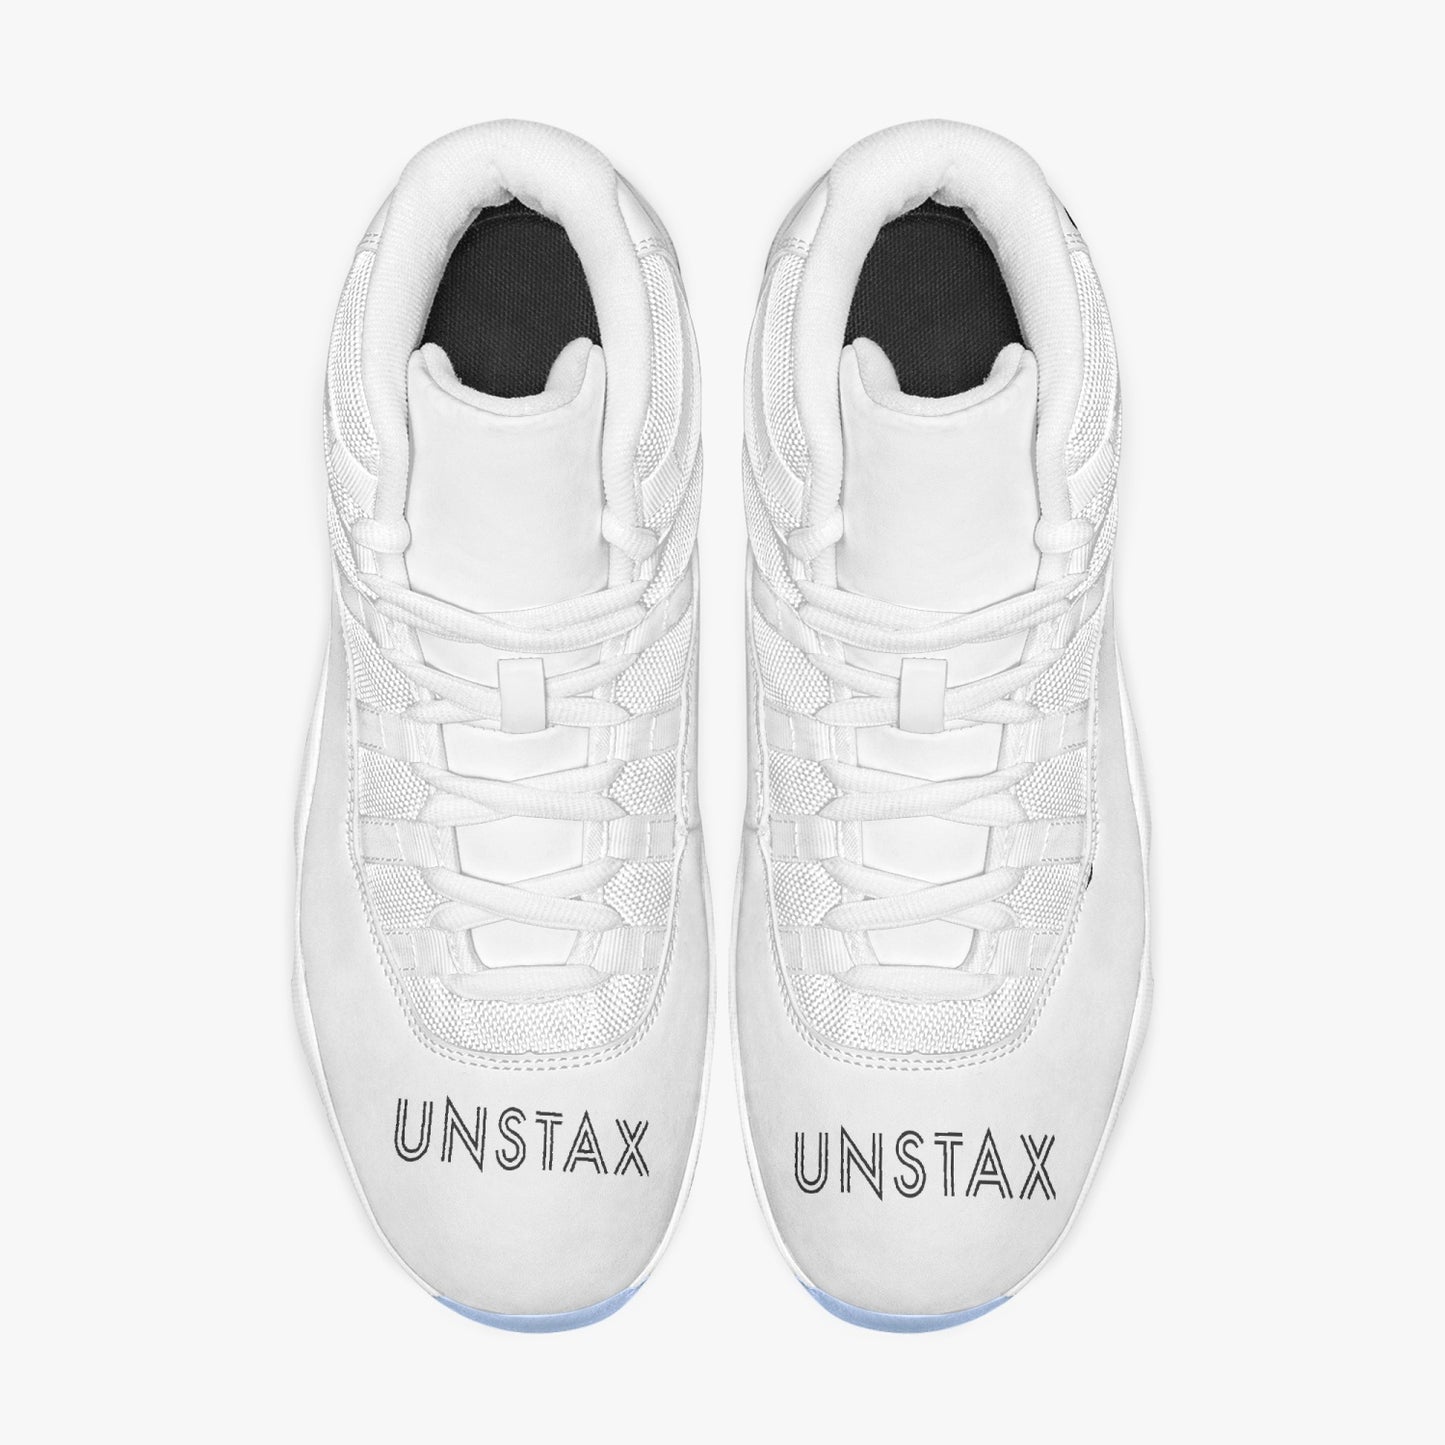 Unstax Whaks Basketball Sneakers -Blue Sole